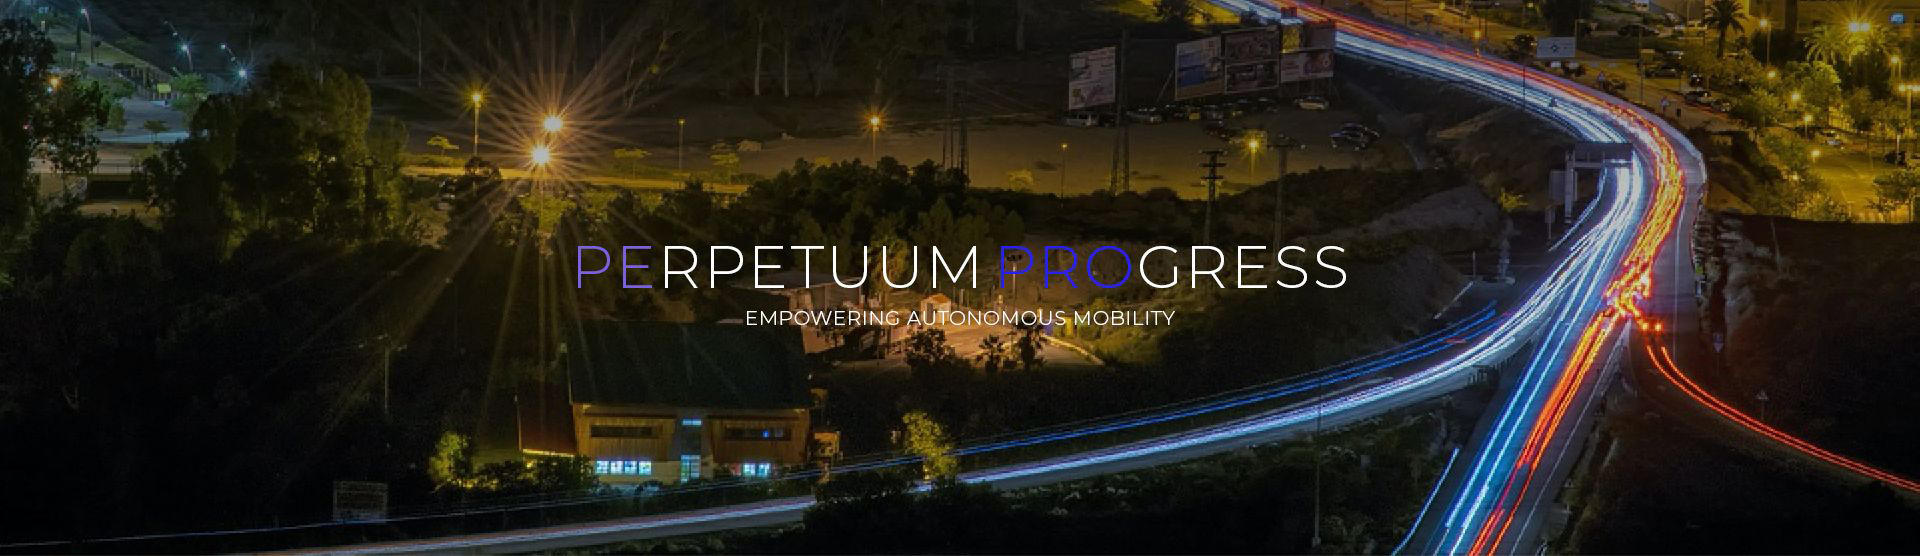 Perpetuum Progress GmbH